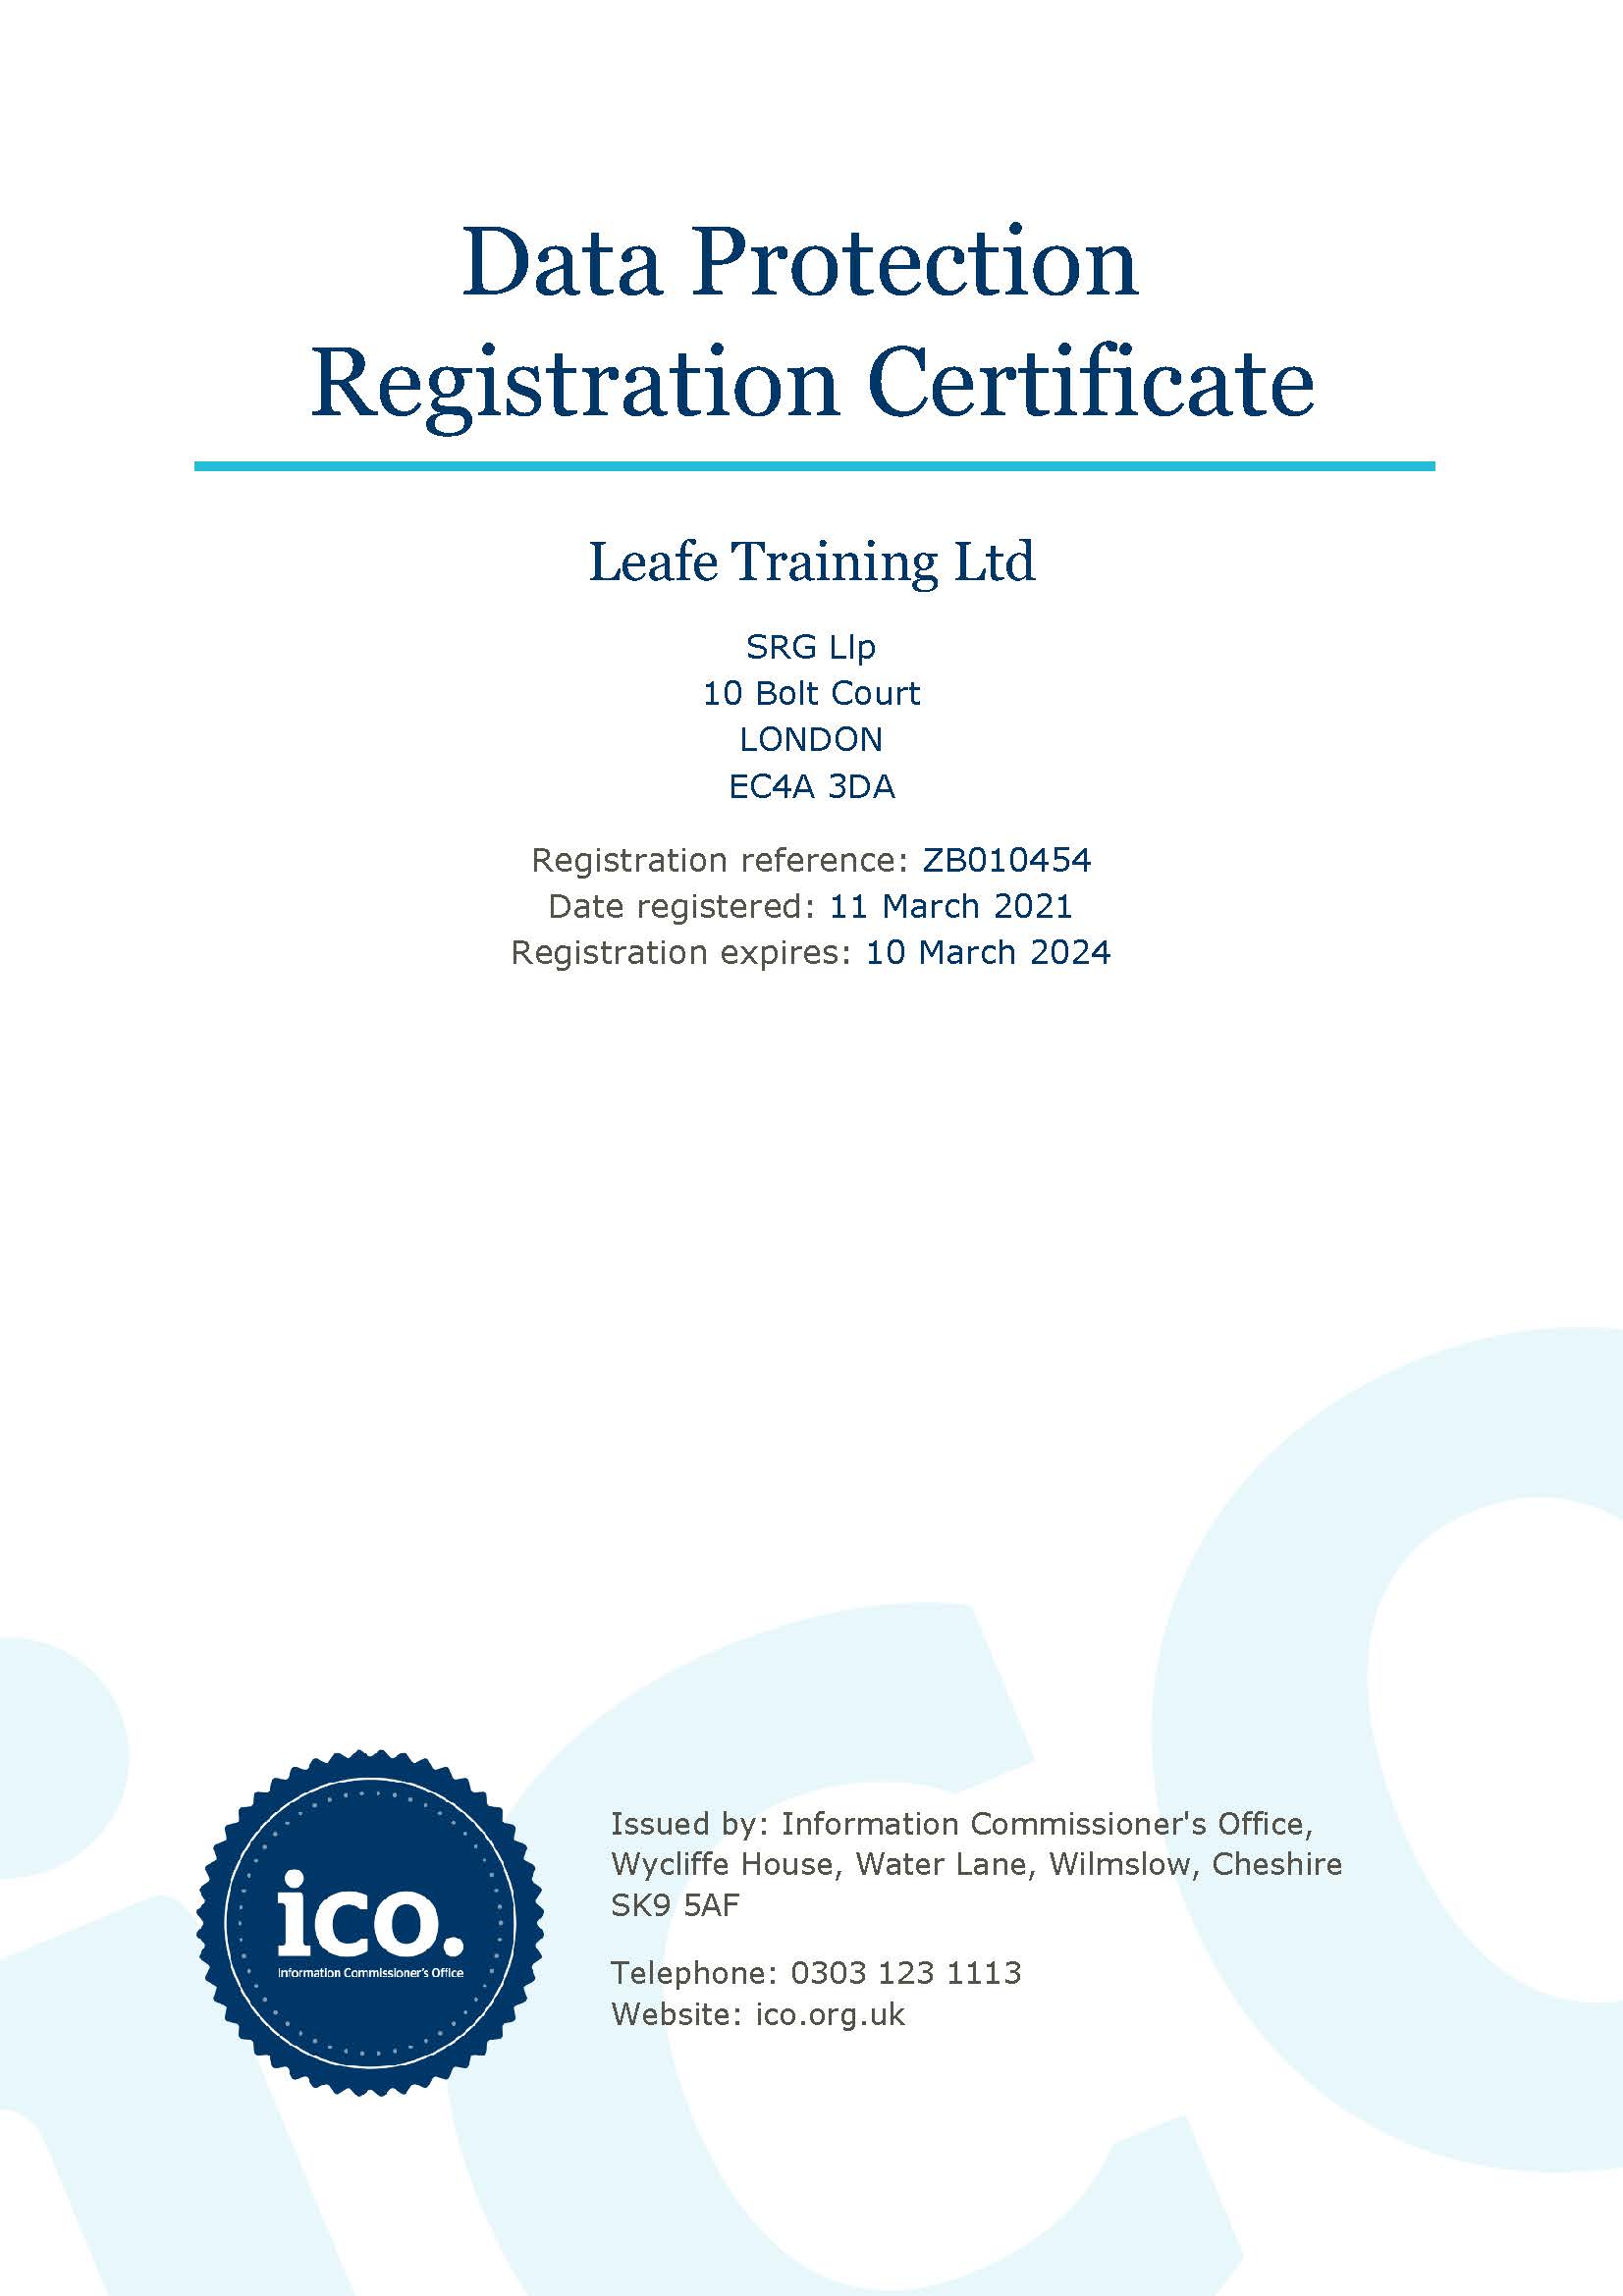 ICO registration